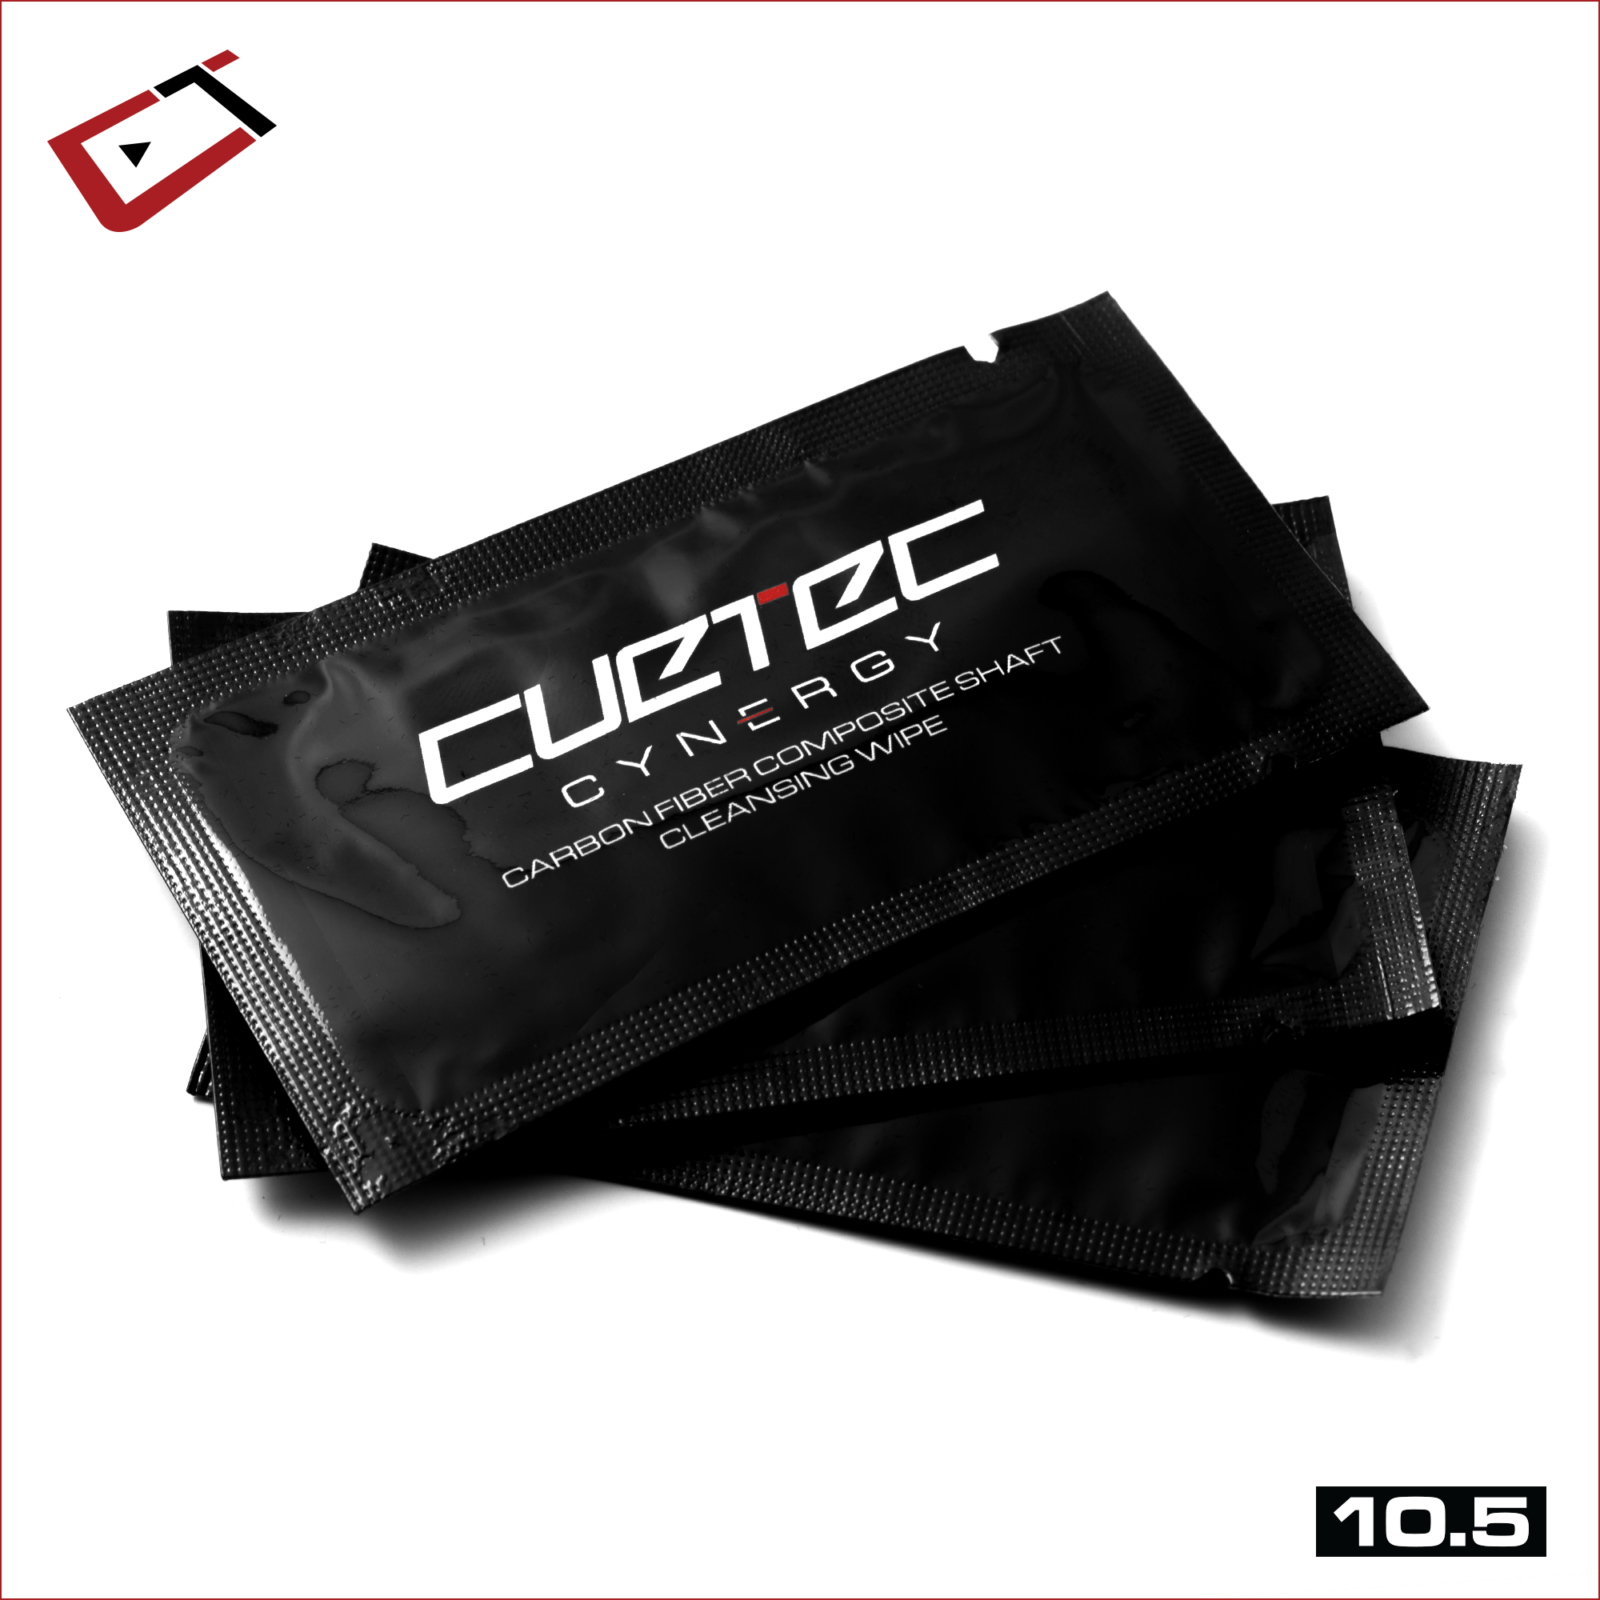 Cuetec Cynergy Shaft 10.5mm 3/8x14 20.0mm 95-031T